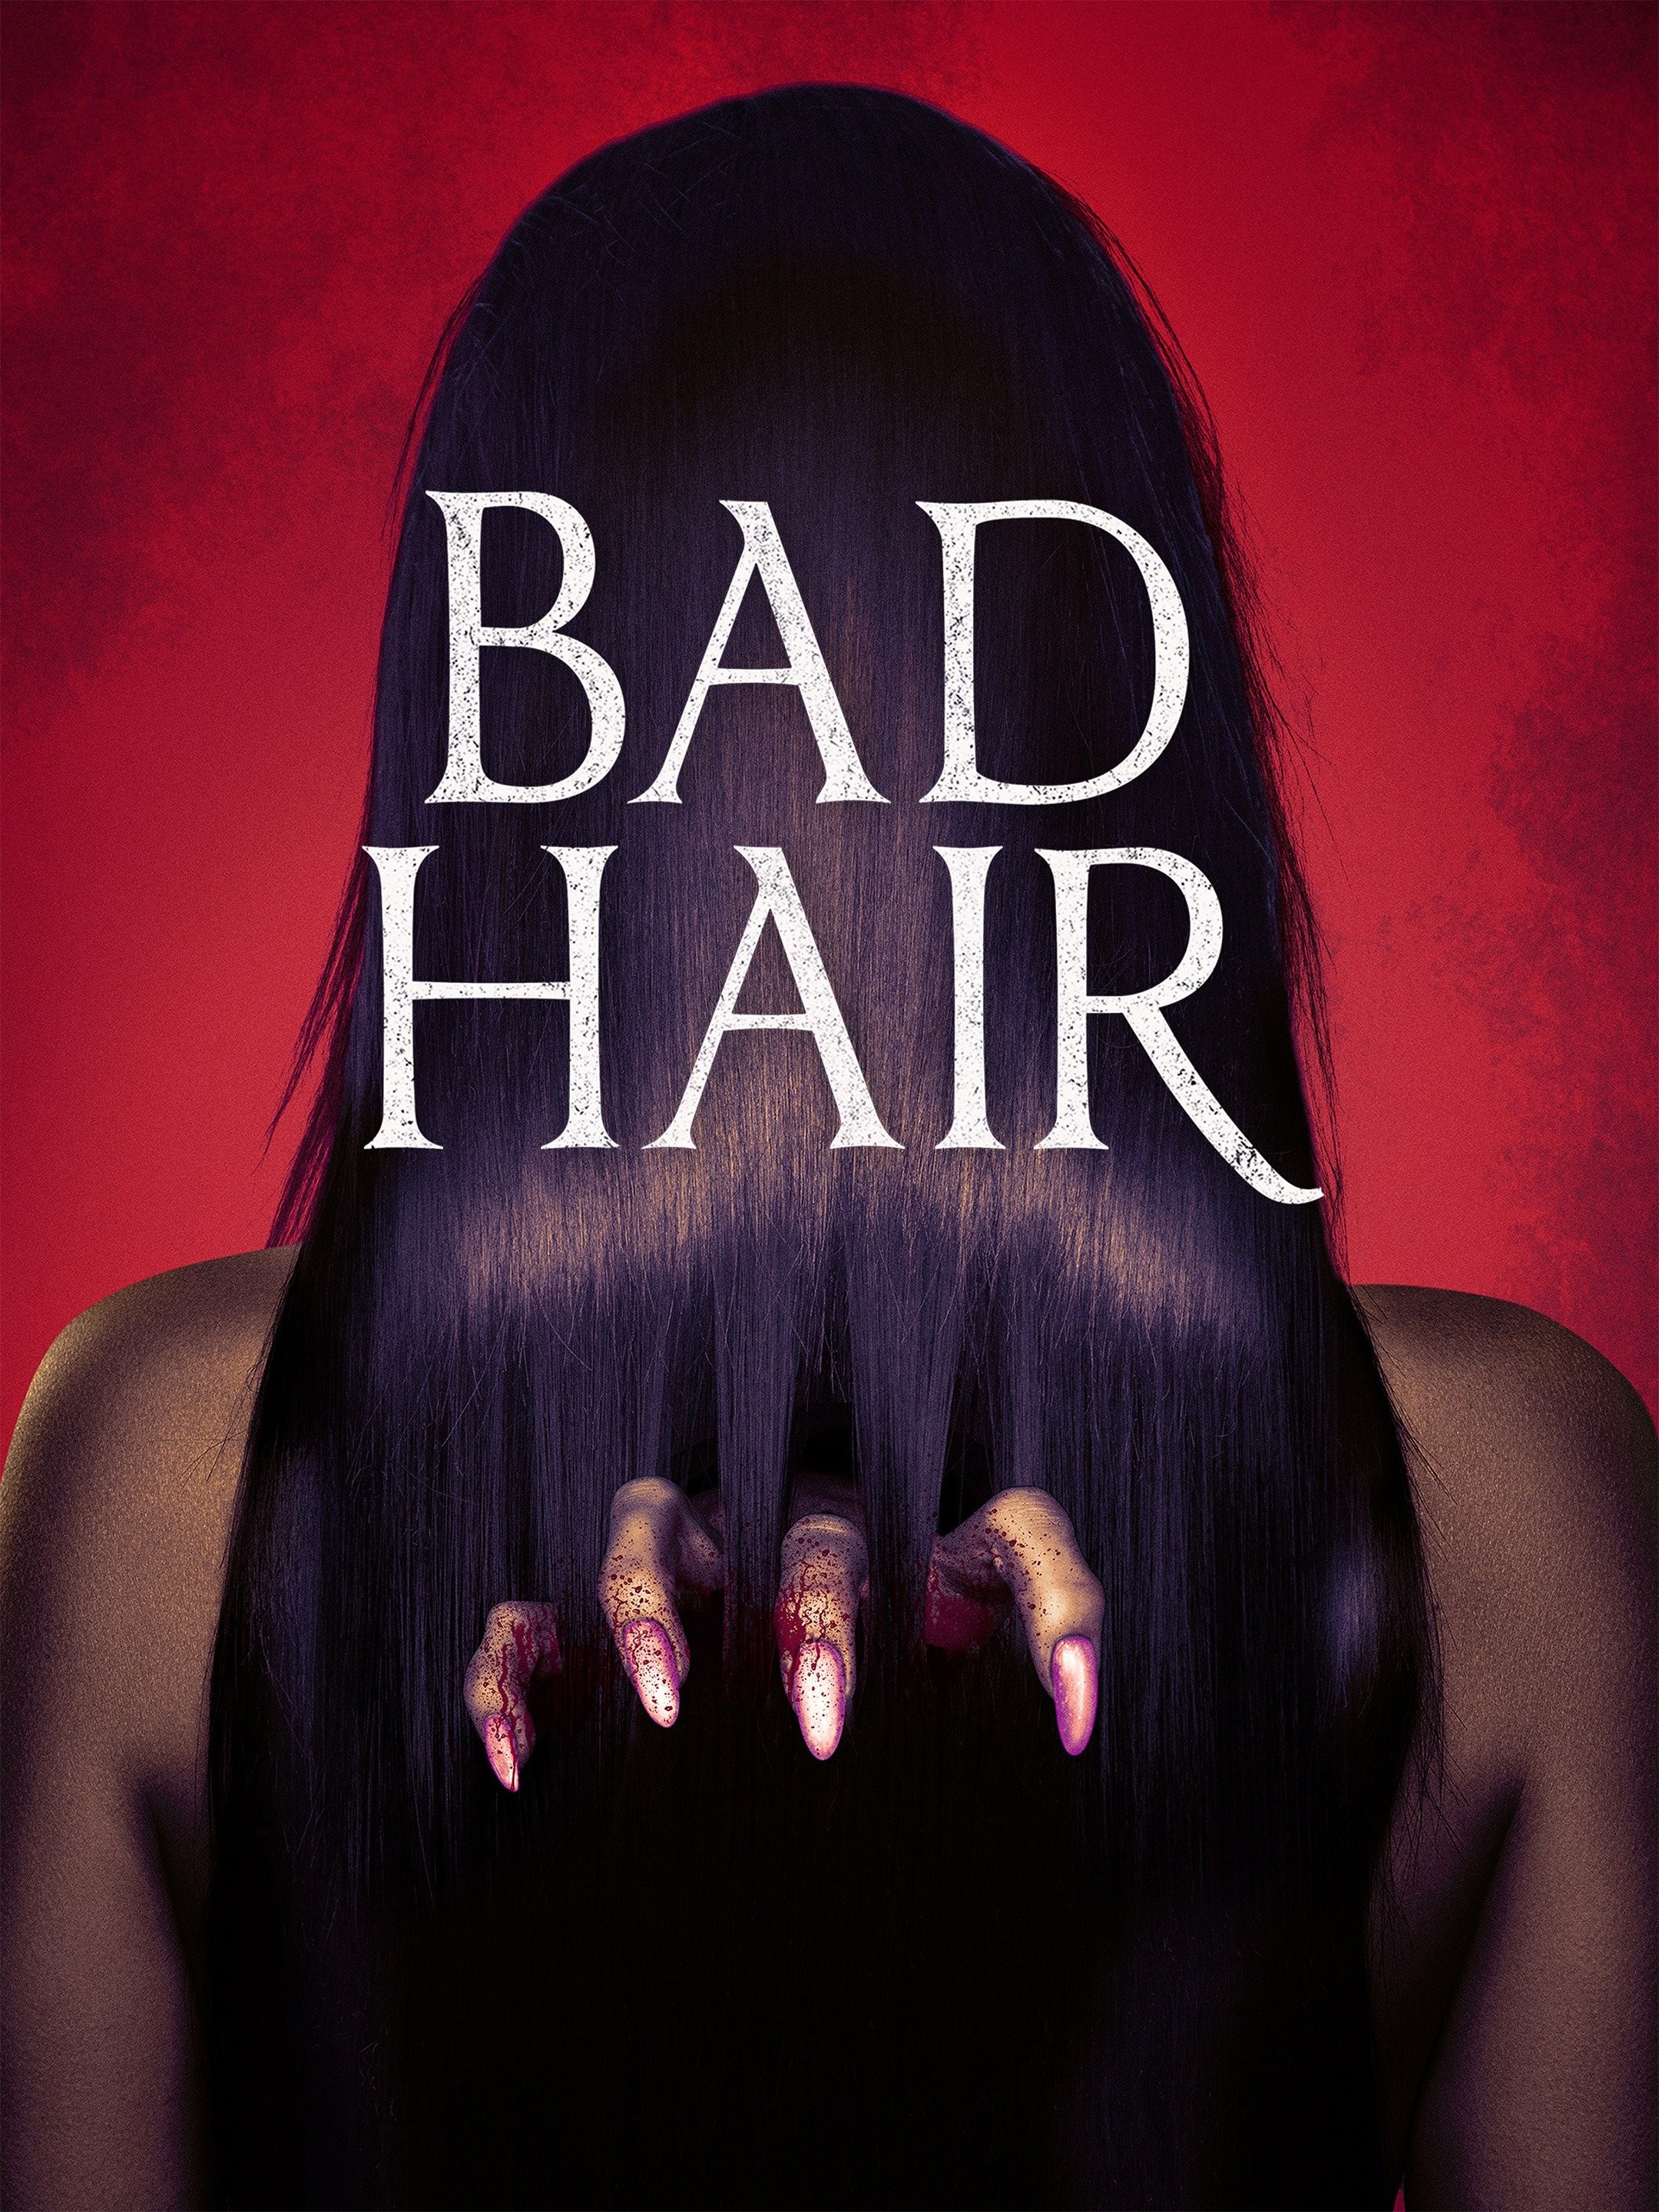 BAD HAIR Trailer 2020 Hulu Original 80s Themed Horror Satire Movie   YouTube